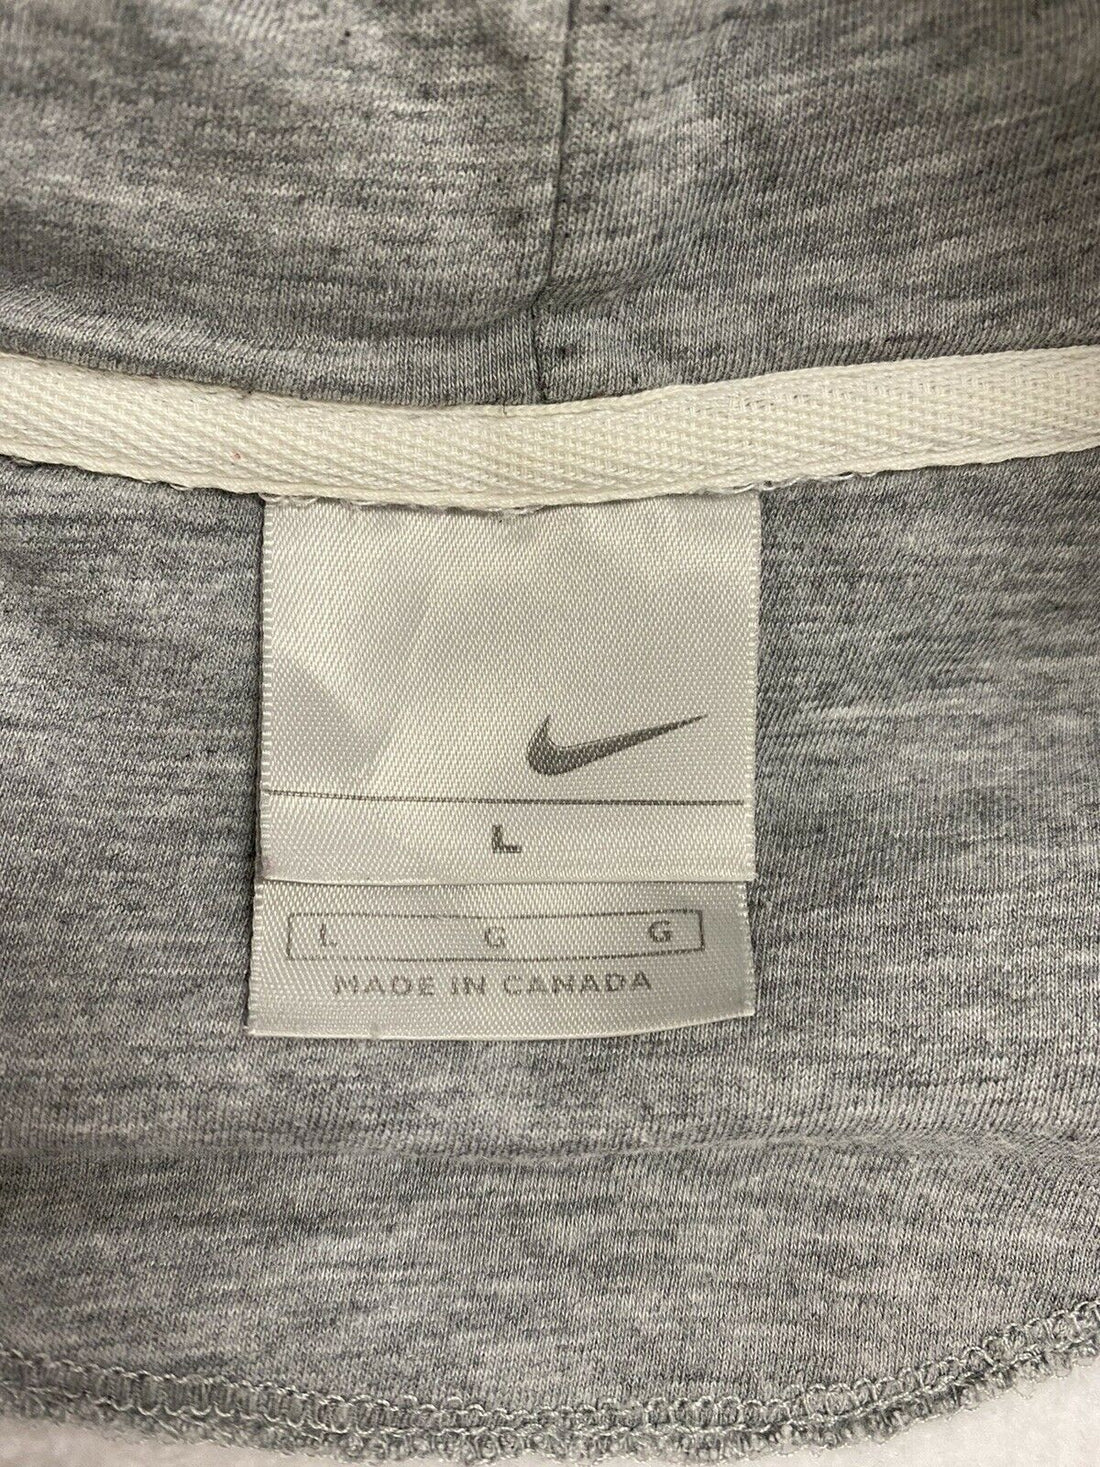 Vintage Nike Sweatshirt Hoodie Size Large White & Gray Full Zip Made Canada